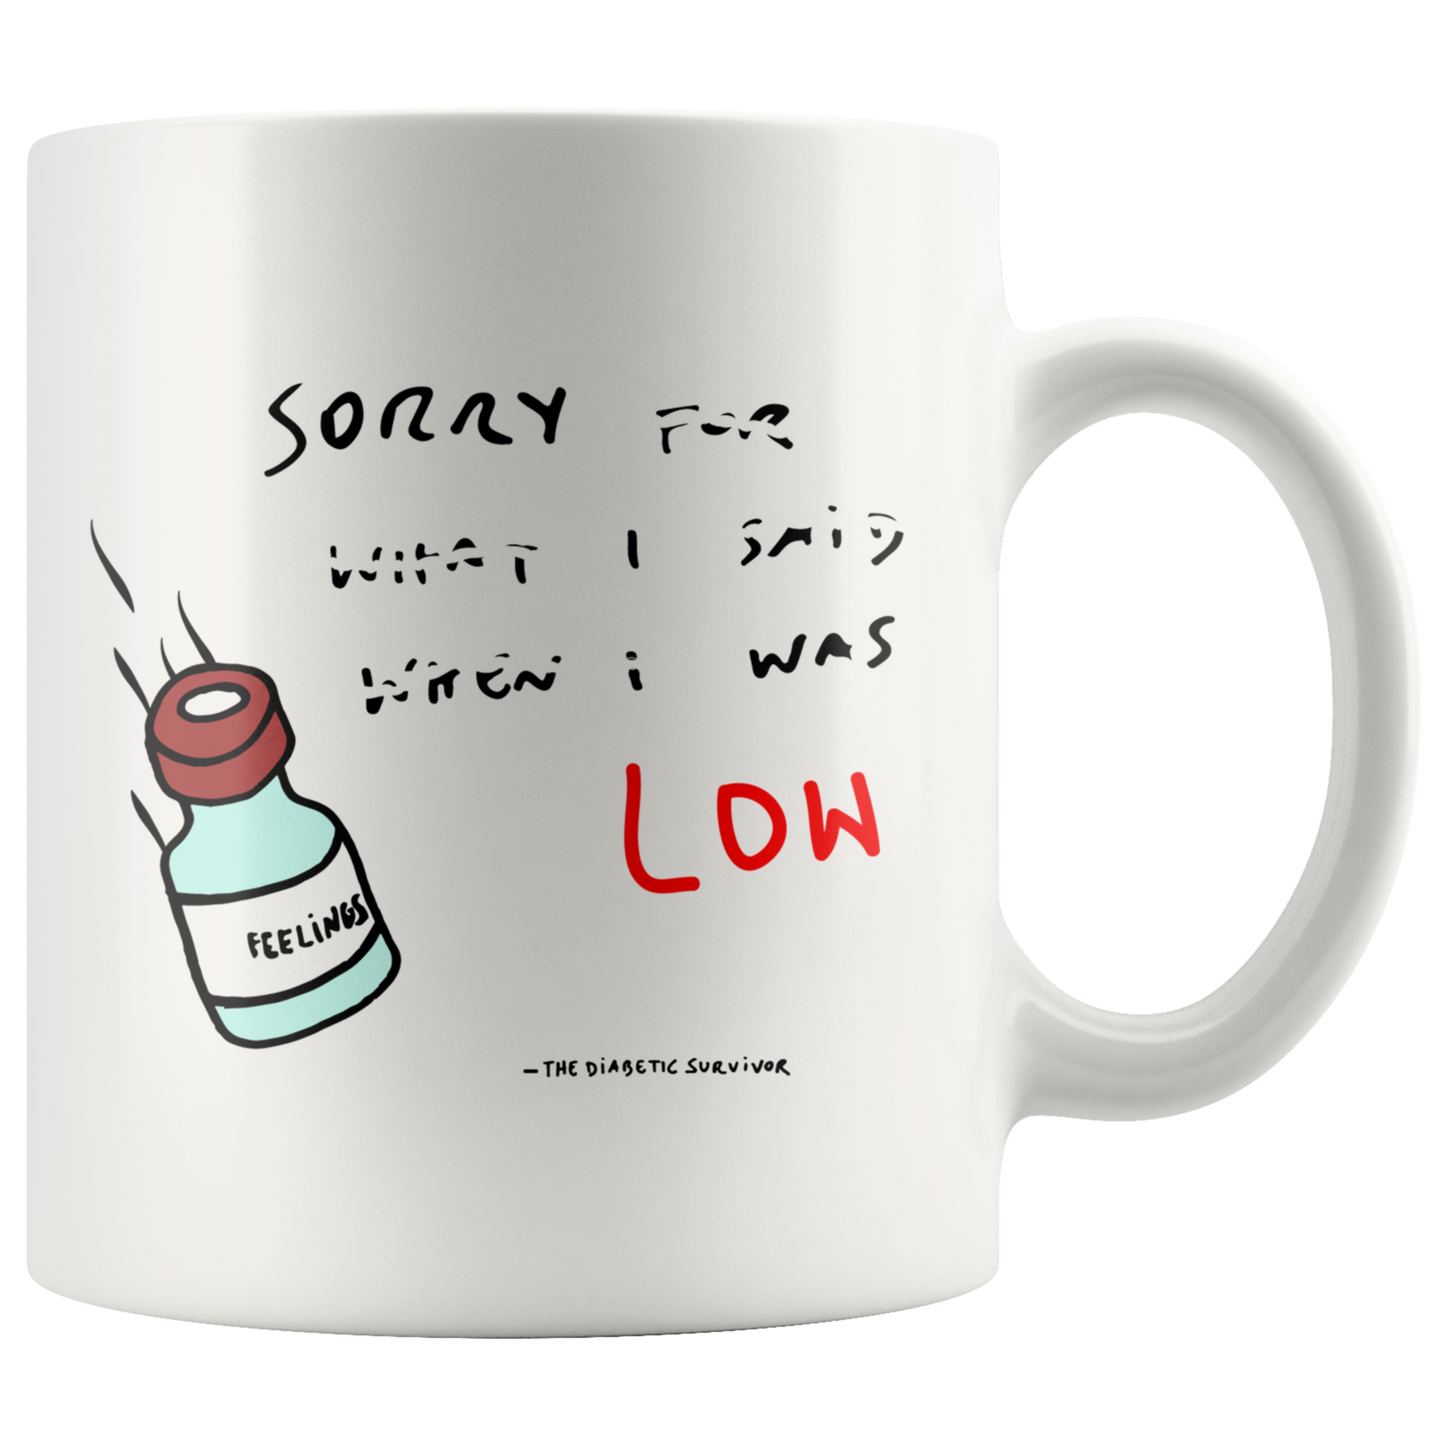 Sorry I was LOW - The Diabetic Survivor Mug